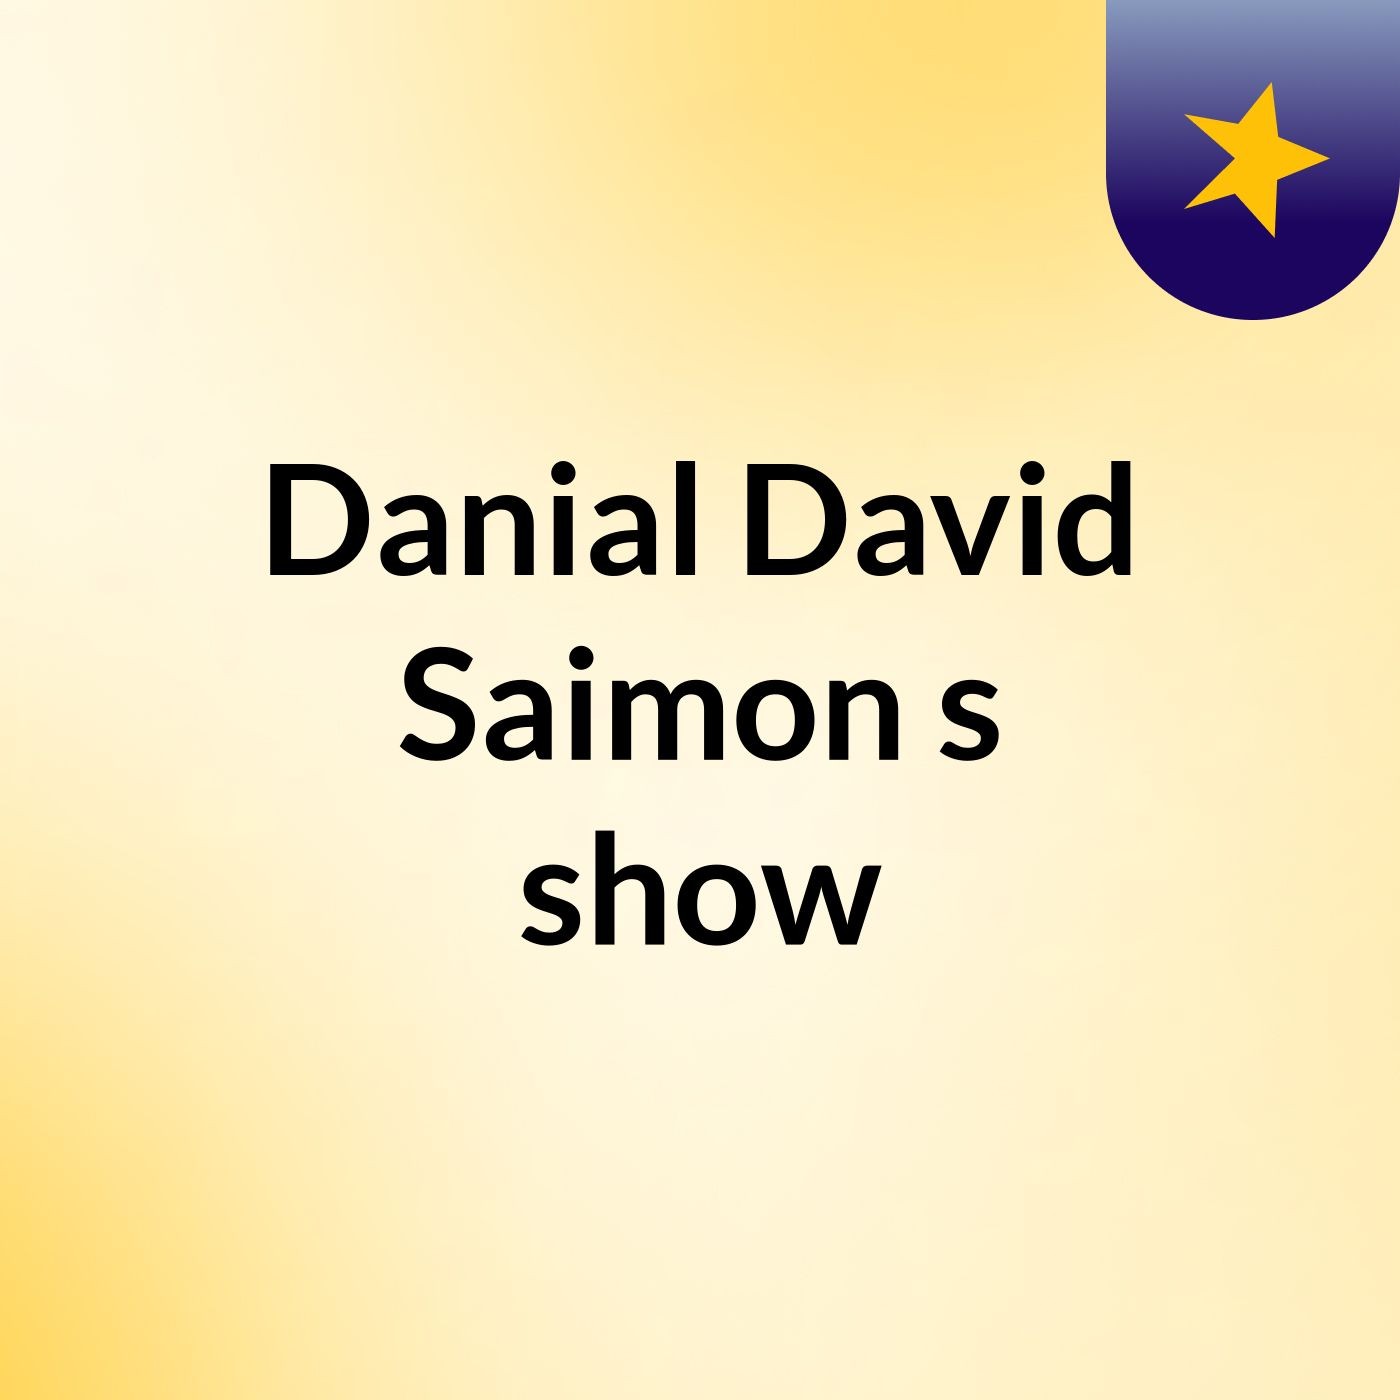 Danial David Saimon's show